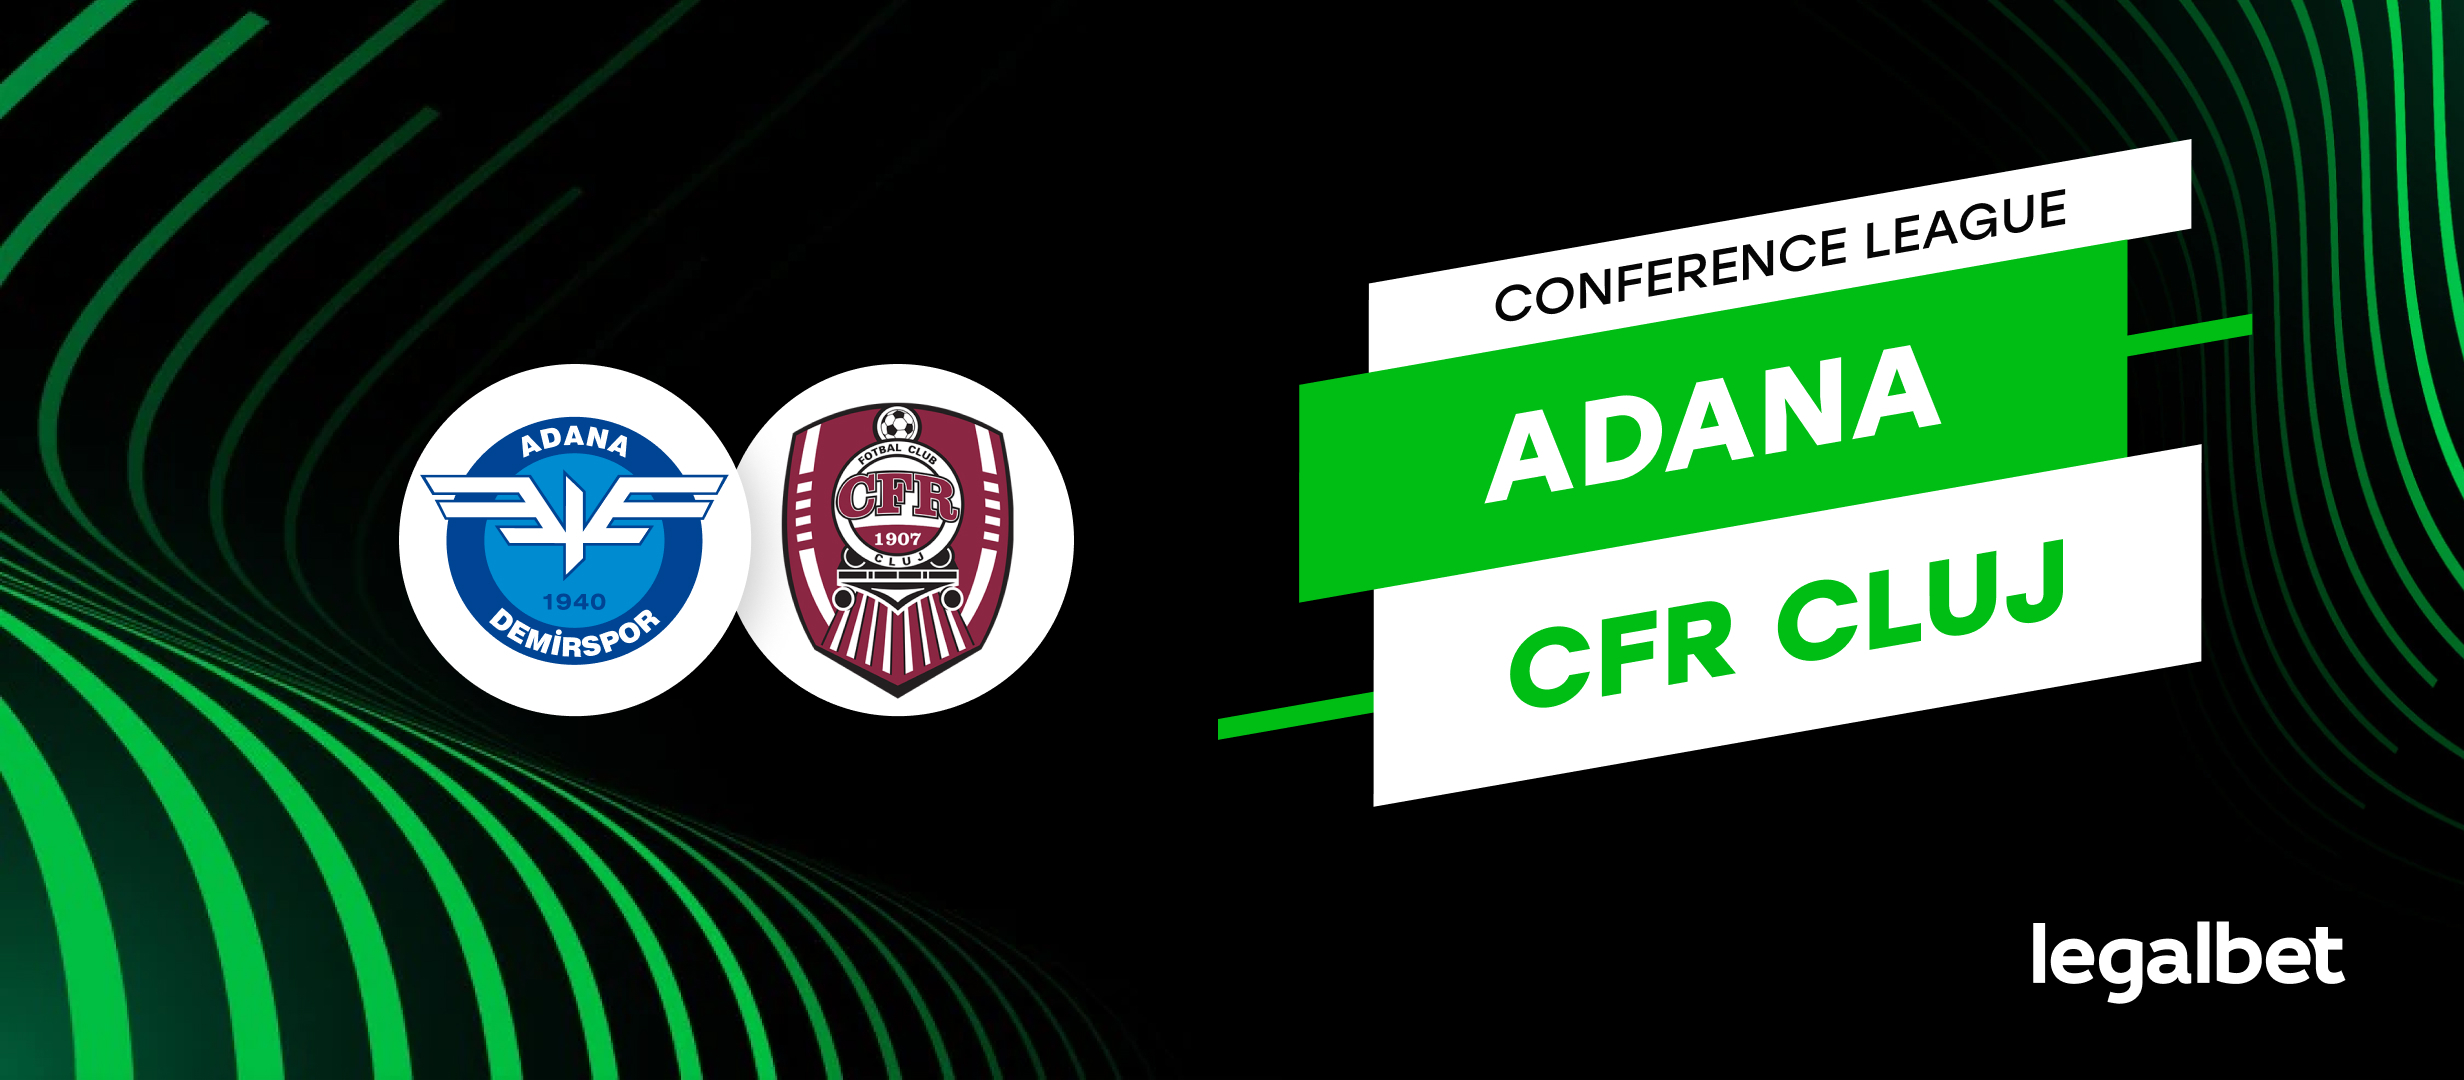 Adana Demirspor vs CFR Cluj – cote la pariuri, ponturi si informatii